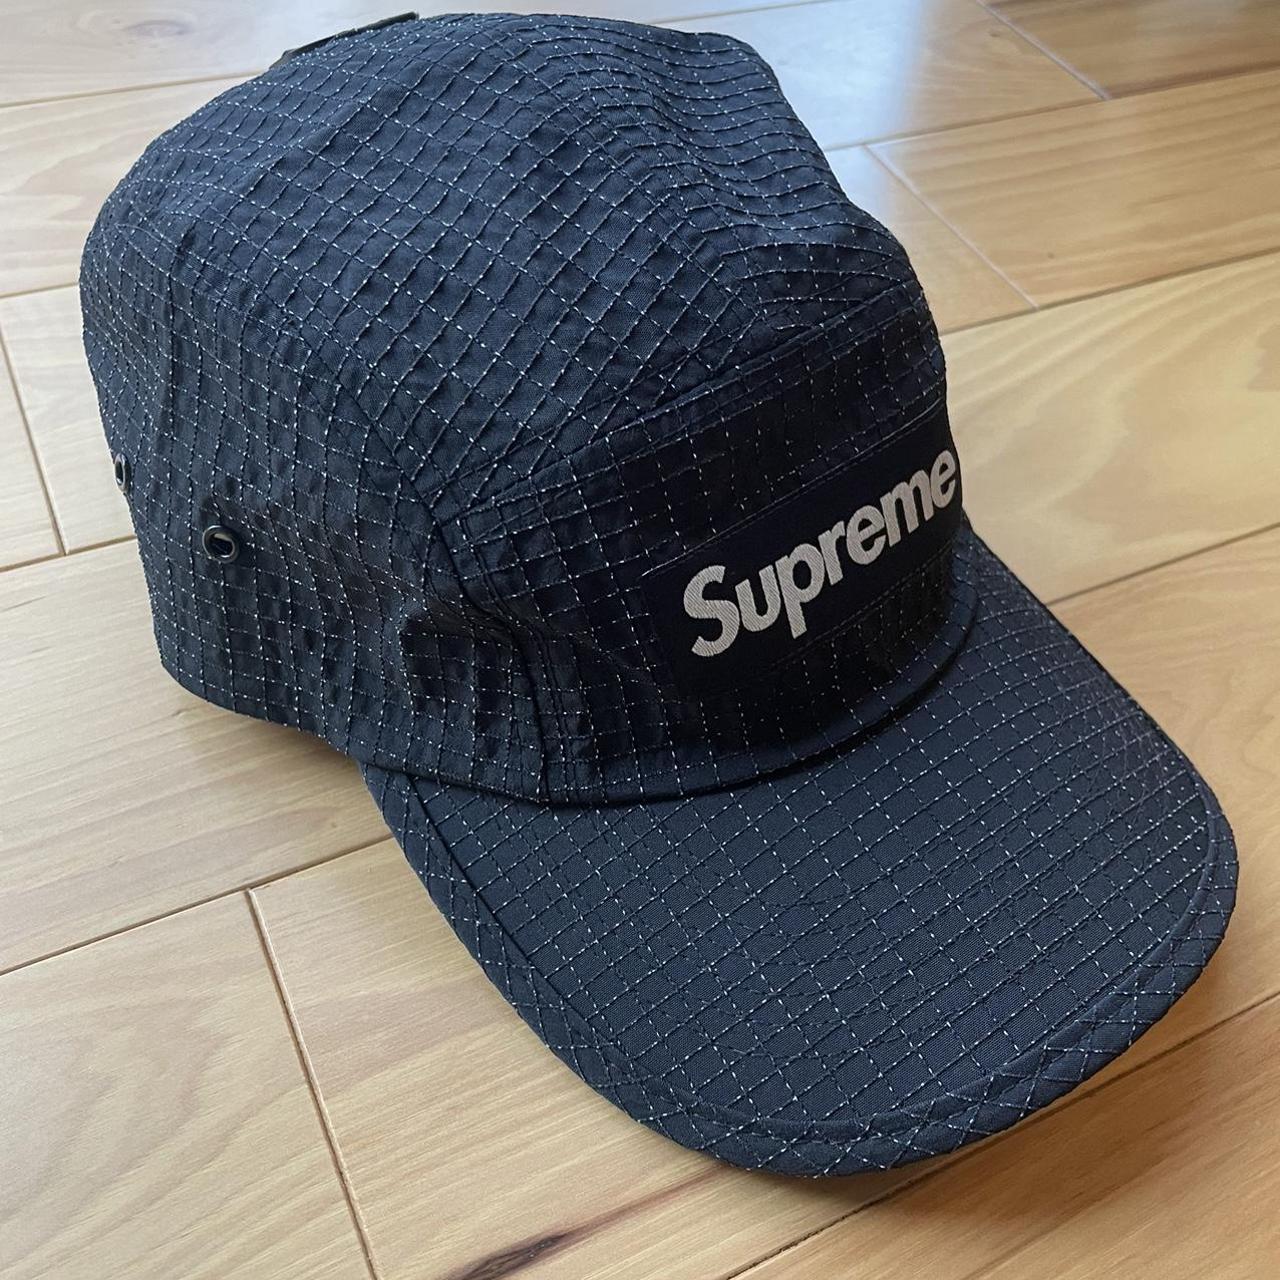 Streetwear Official | Supreme | Supreme Glow Ripstop Camp Cap- Grey